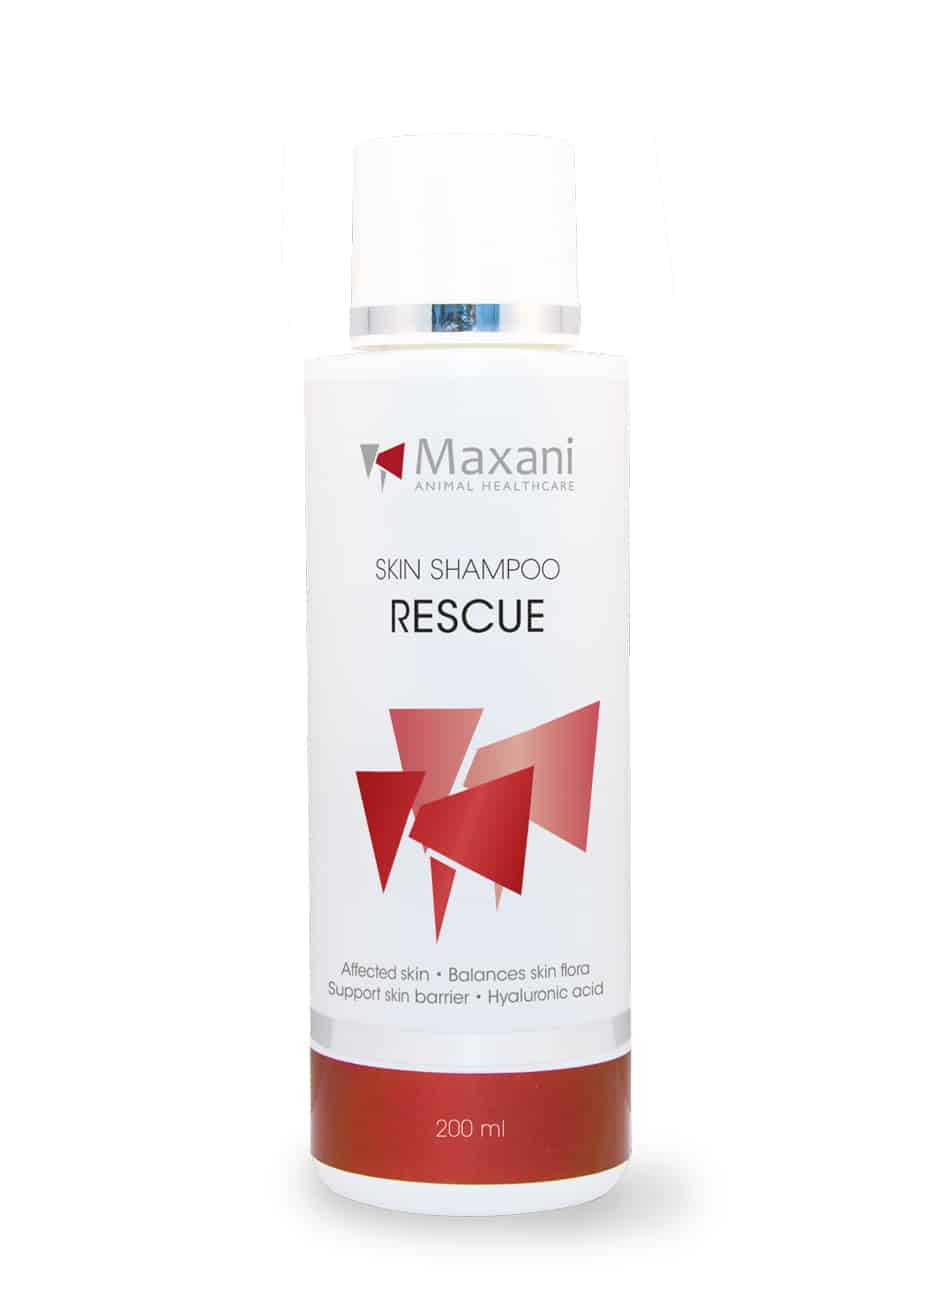 Janice Resultaat Bloesem Maxani Rescue shampoo kopen? Veilig en betrouwbaar bestellen!